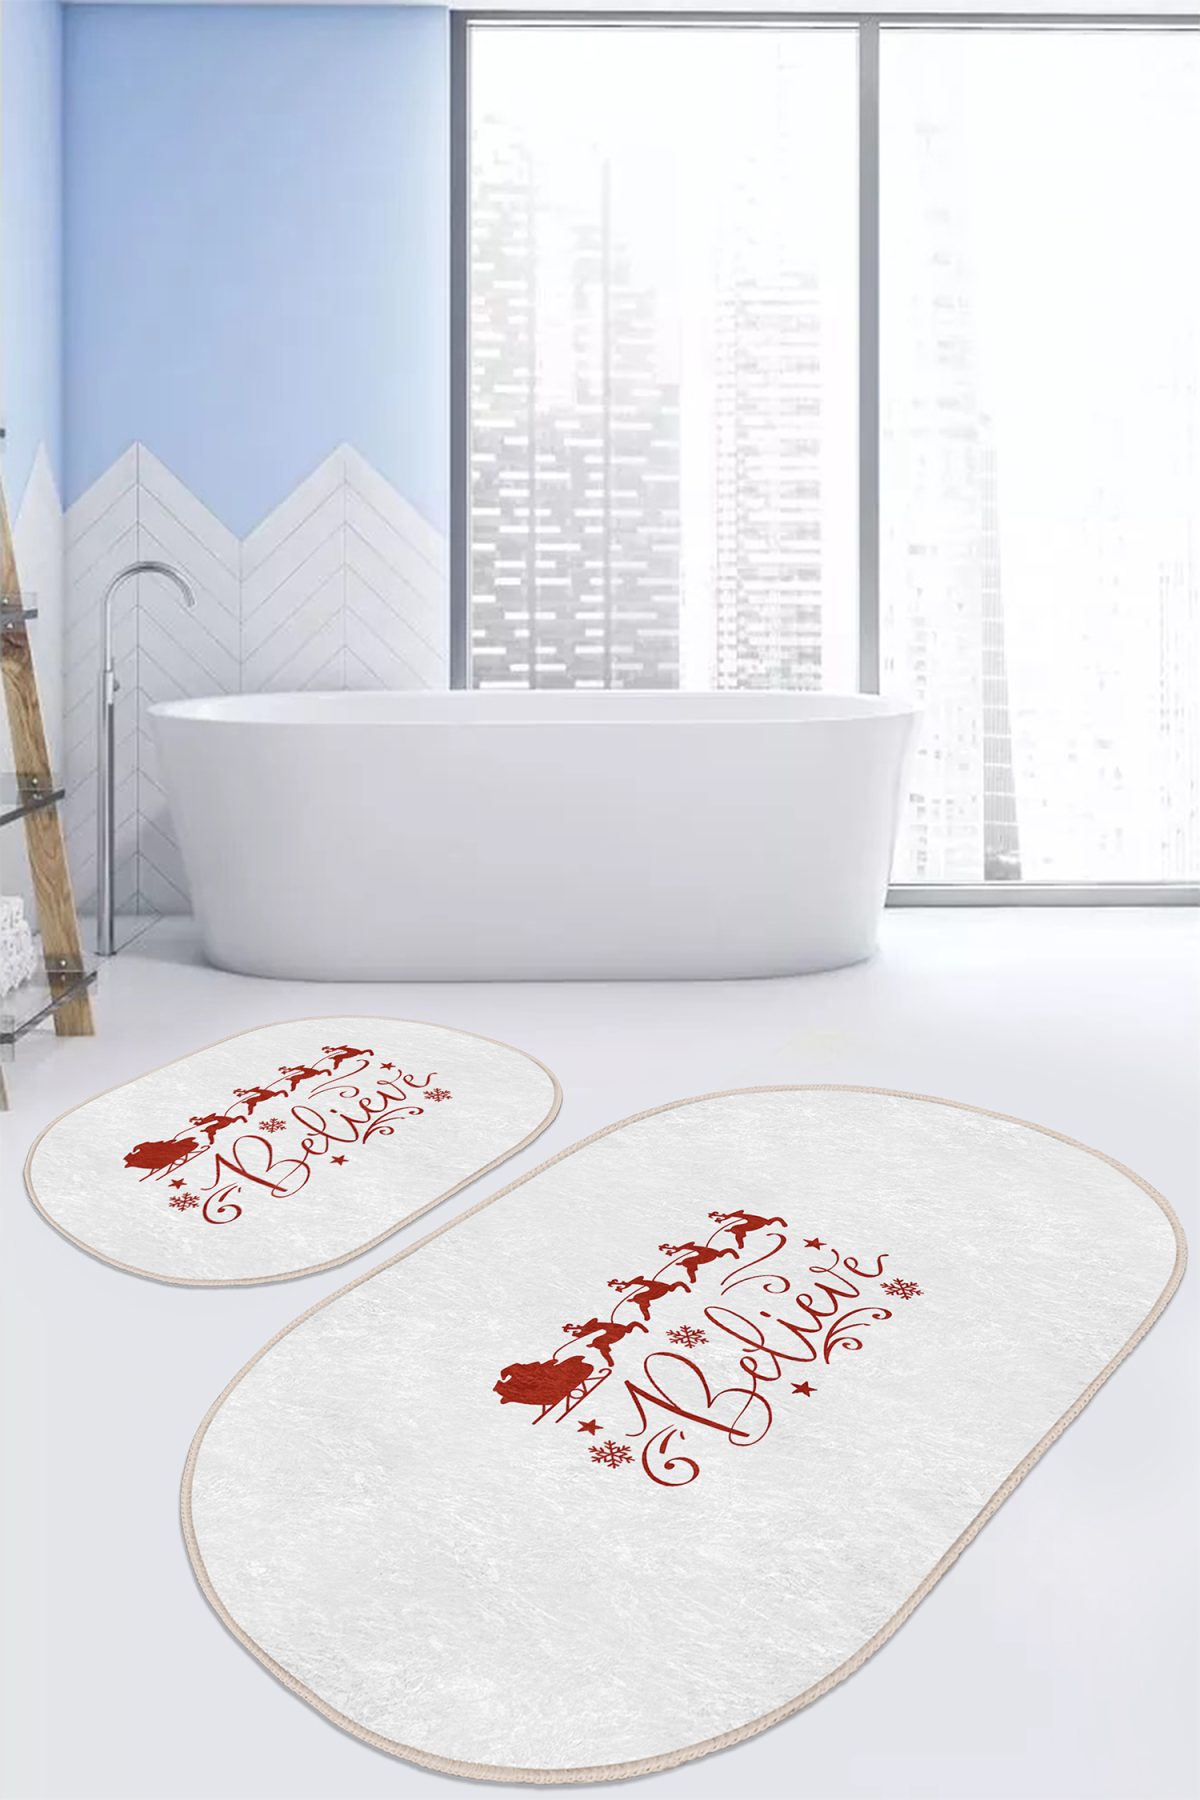 Beyaz Zeminli Yılbaşı Motifli 2'li Oval Kaymaz Tabanlı Mutfak Paspas Seti & Banyo Paspas Takımı Realhomes